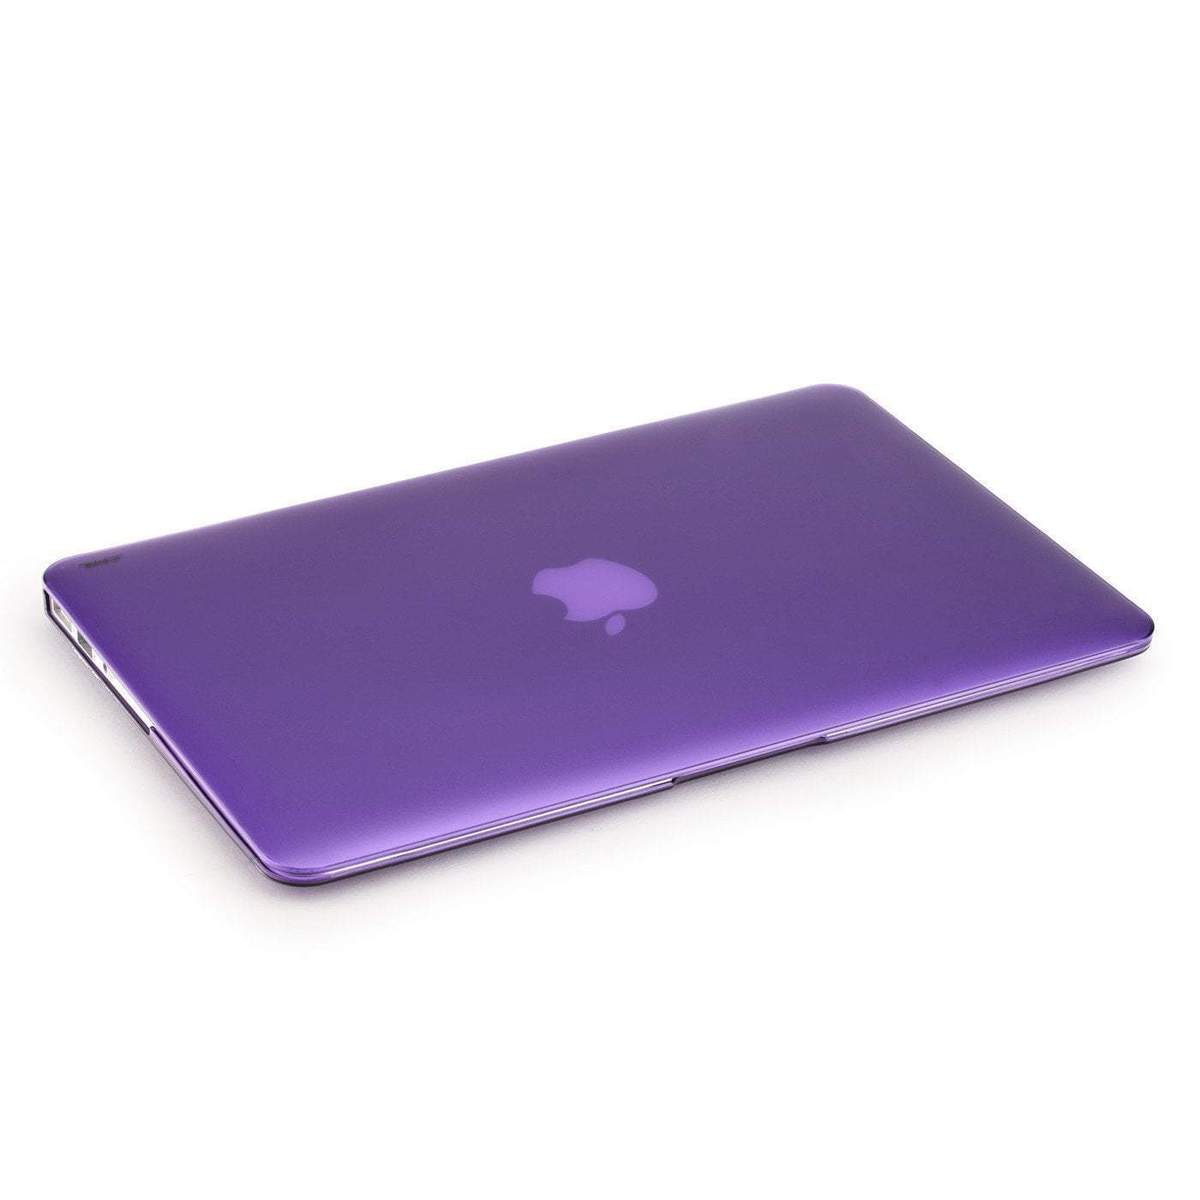 slip resistant silicon cover for mac book pro15 inch 2012